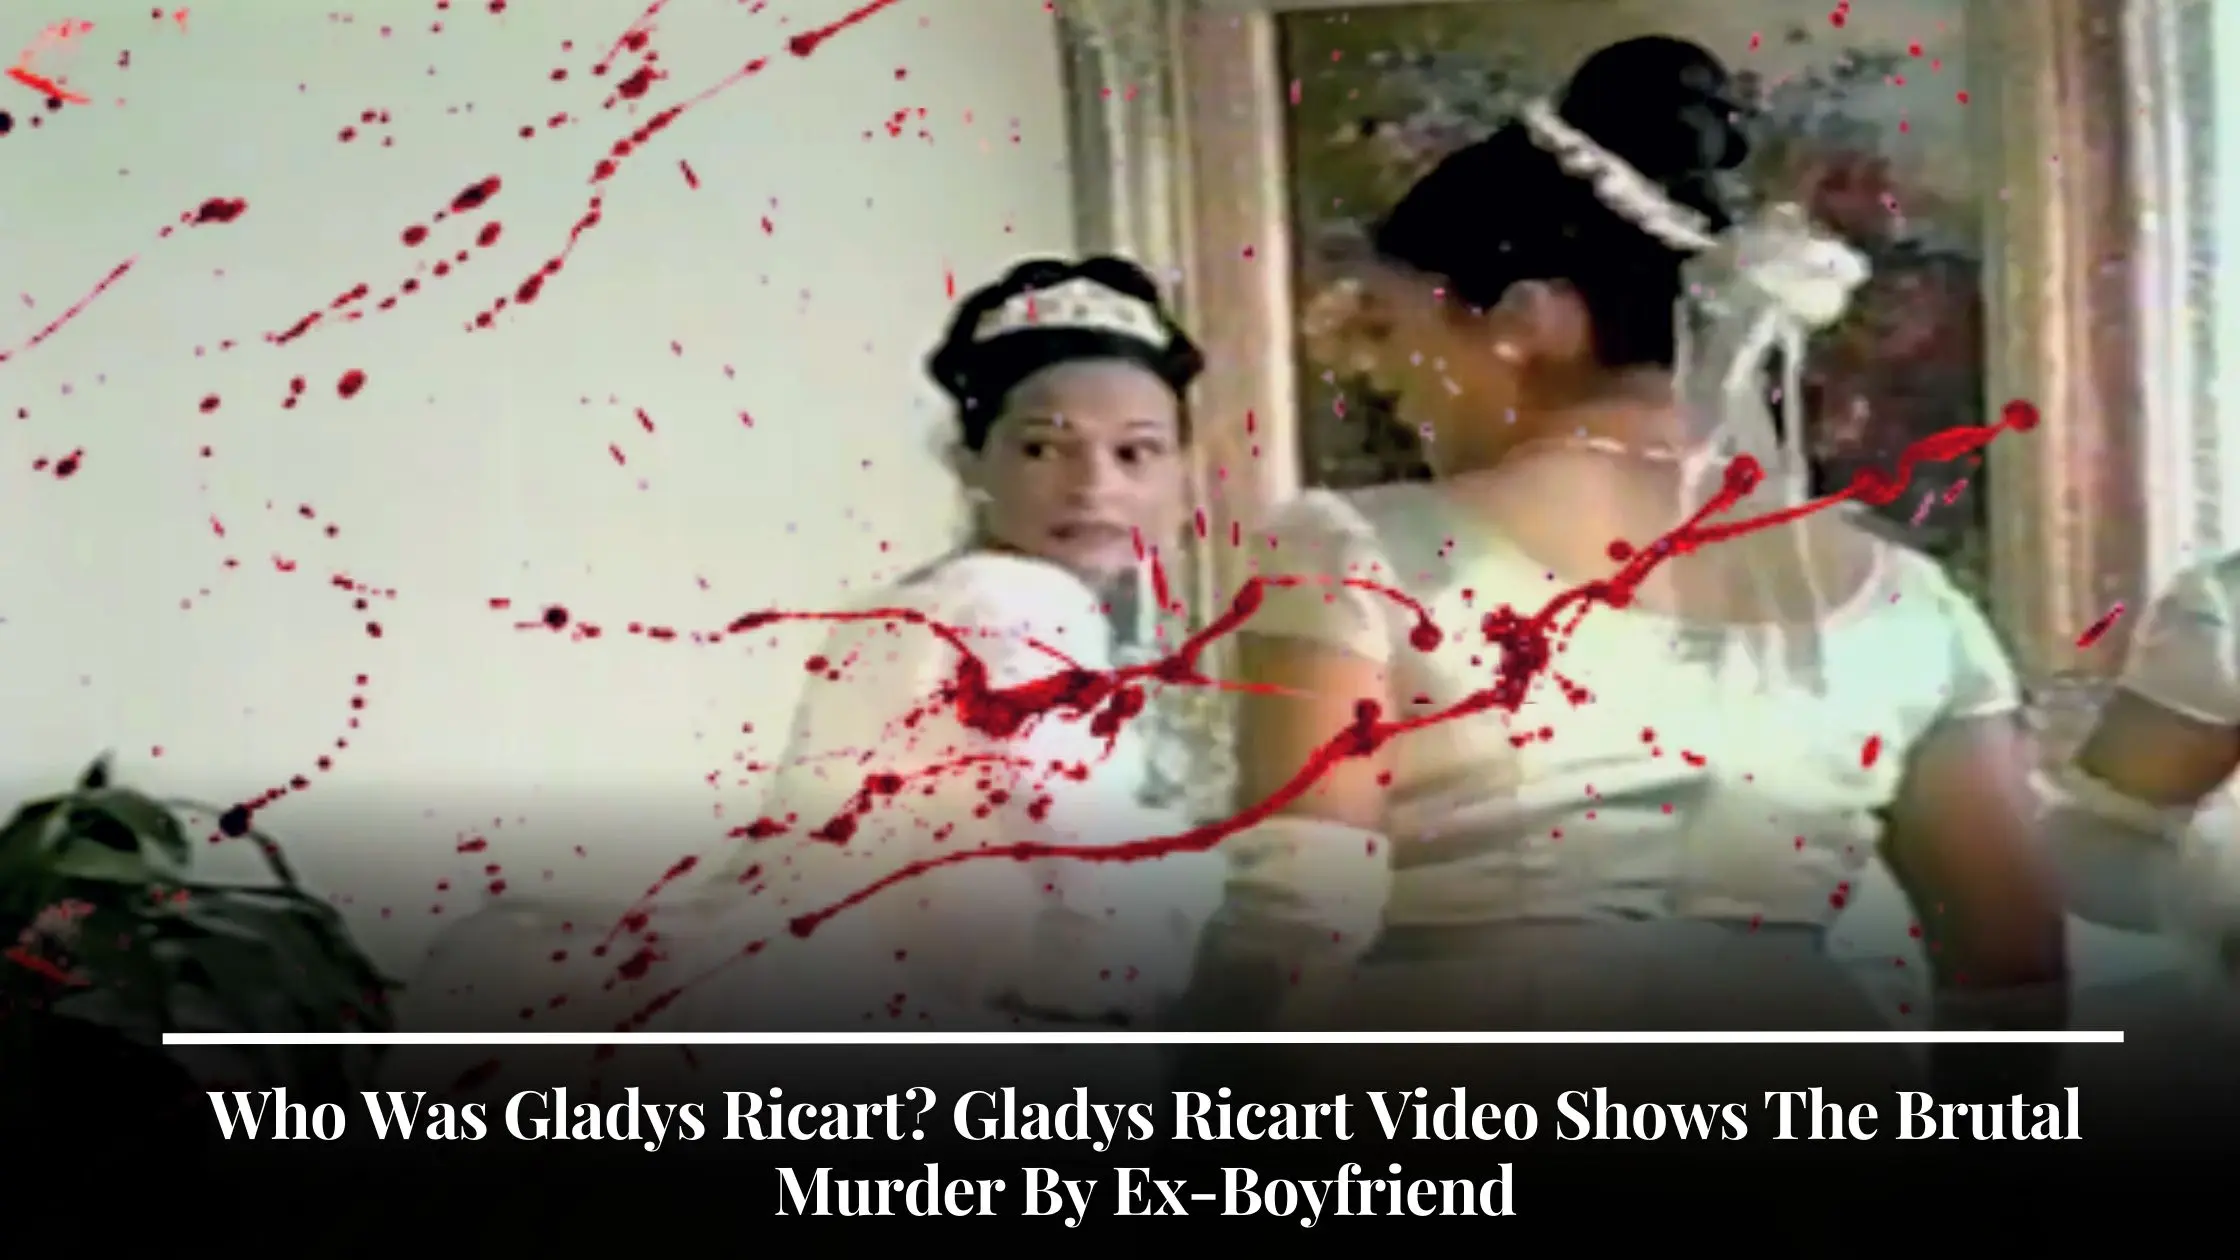 Who Was Gladys Ricart Gladys Ricart Video Shows The Brutal Murder By Ex-Boyfriend